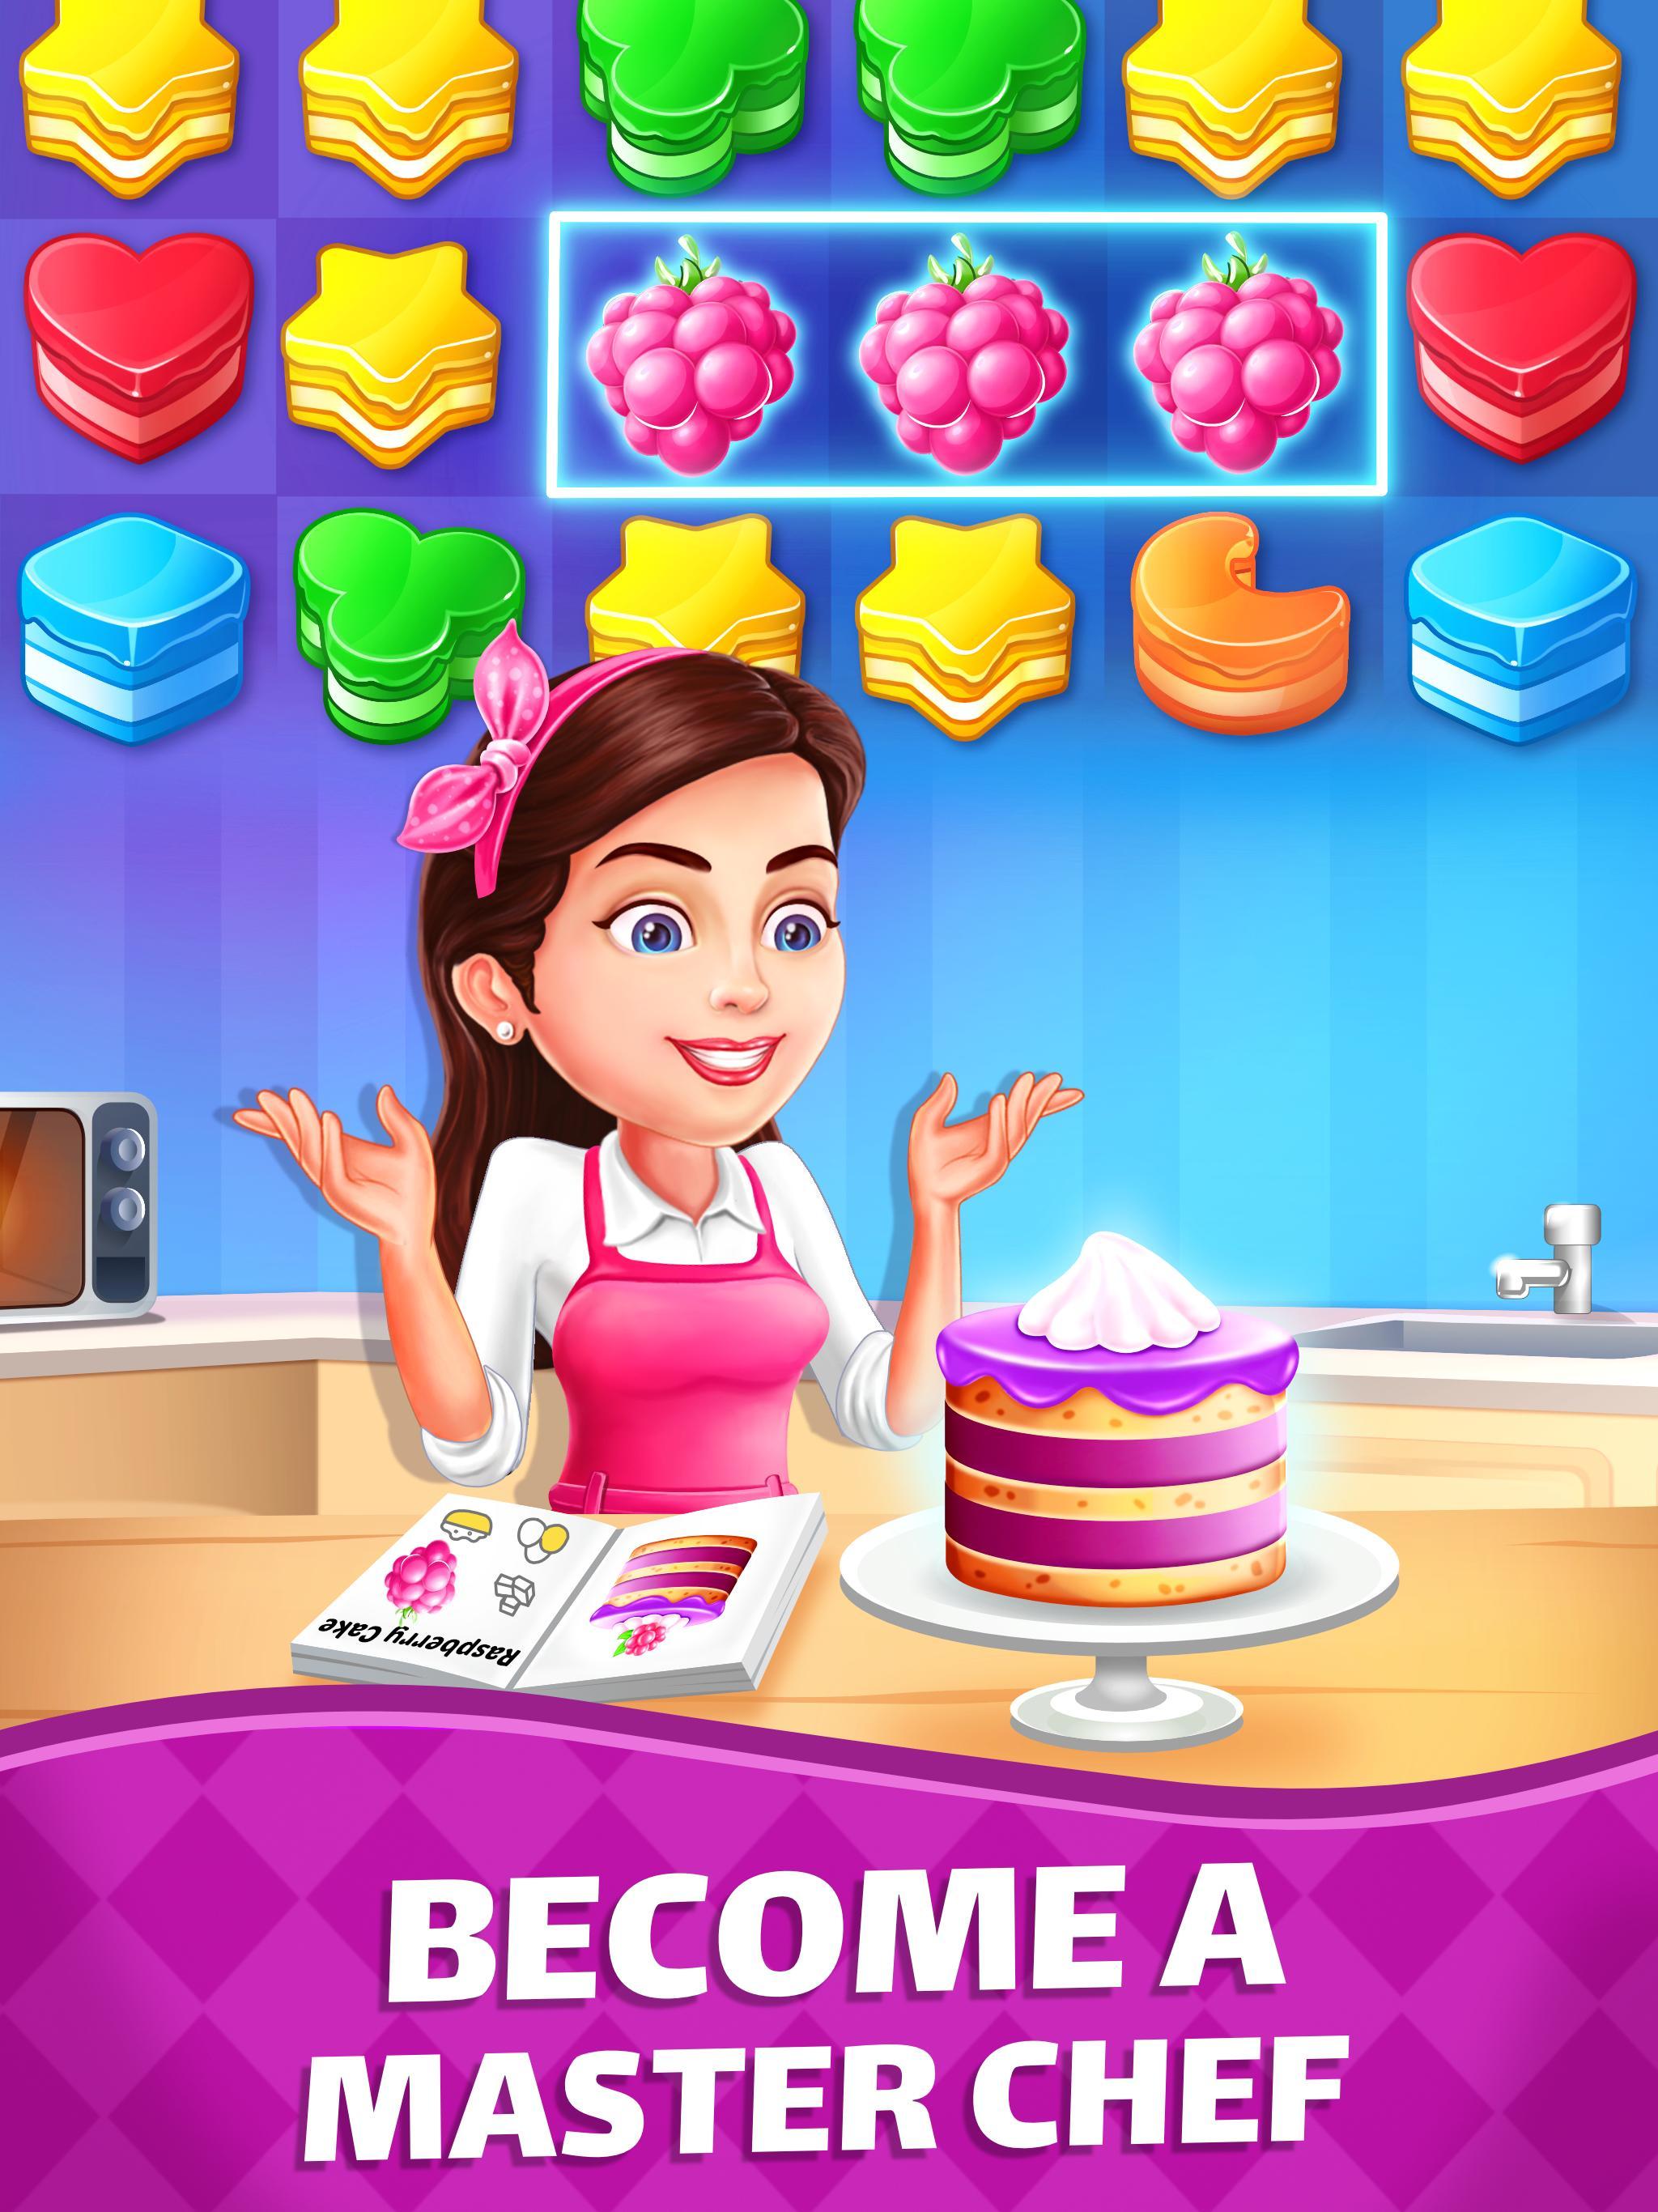 Cake Blast 🎂 - Match 3 Puzzle Game 🍰 1.0.6 Screenshot 8